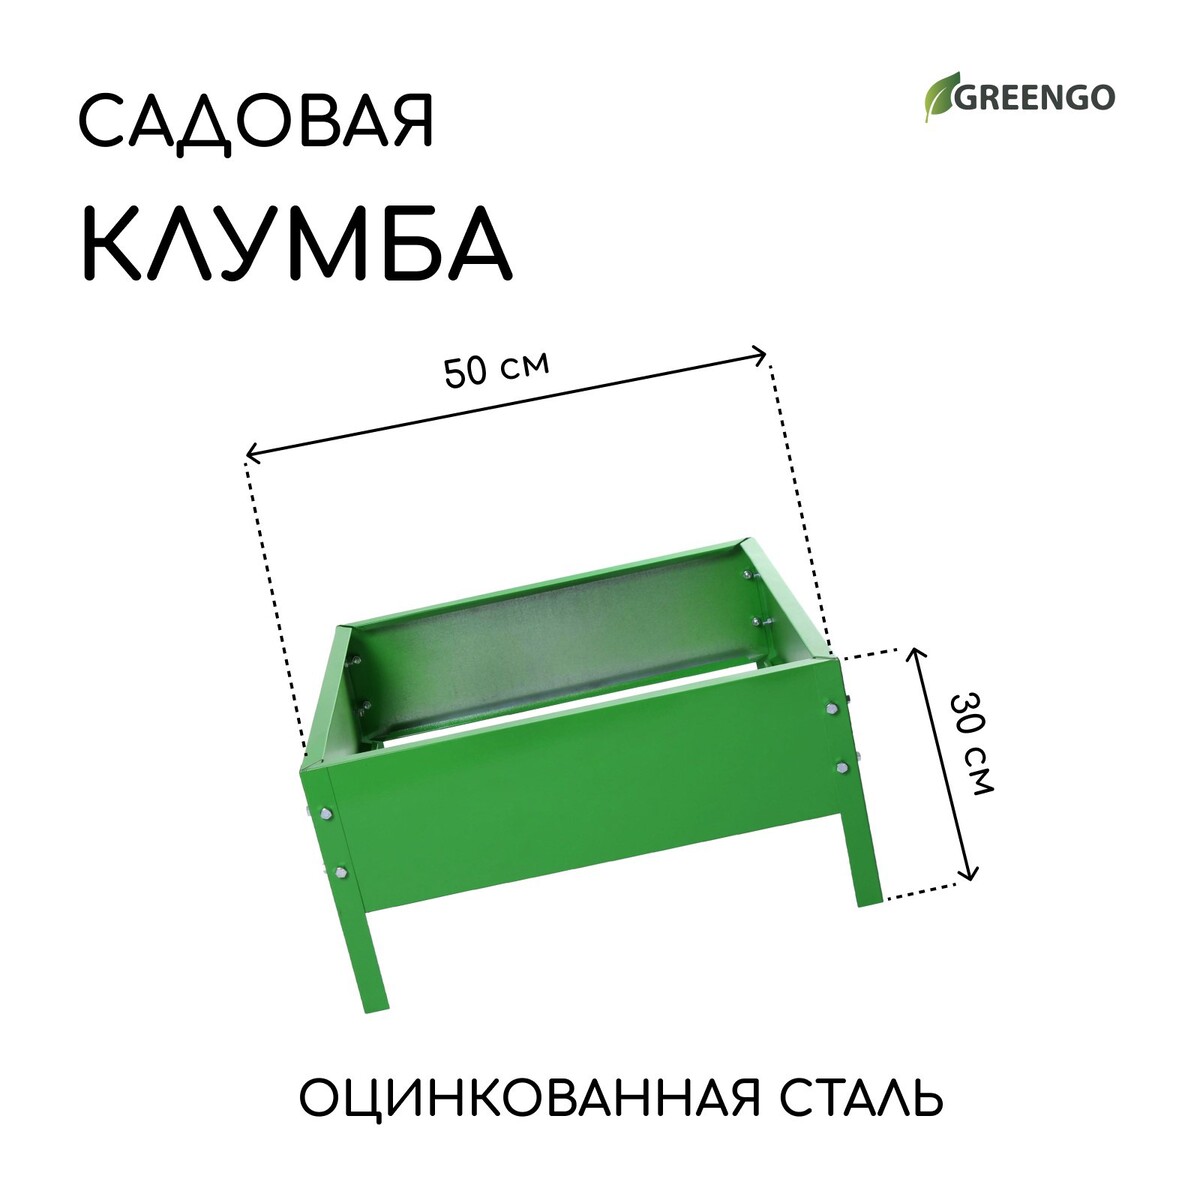 Клумба оцинкованная, 50 × 50 × 15 см, ярко-зеленая, greengo